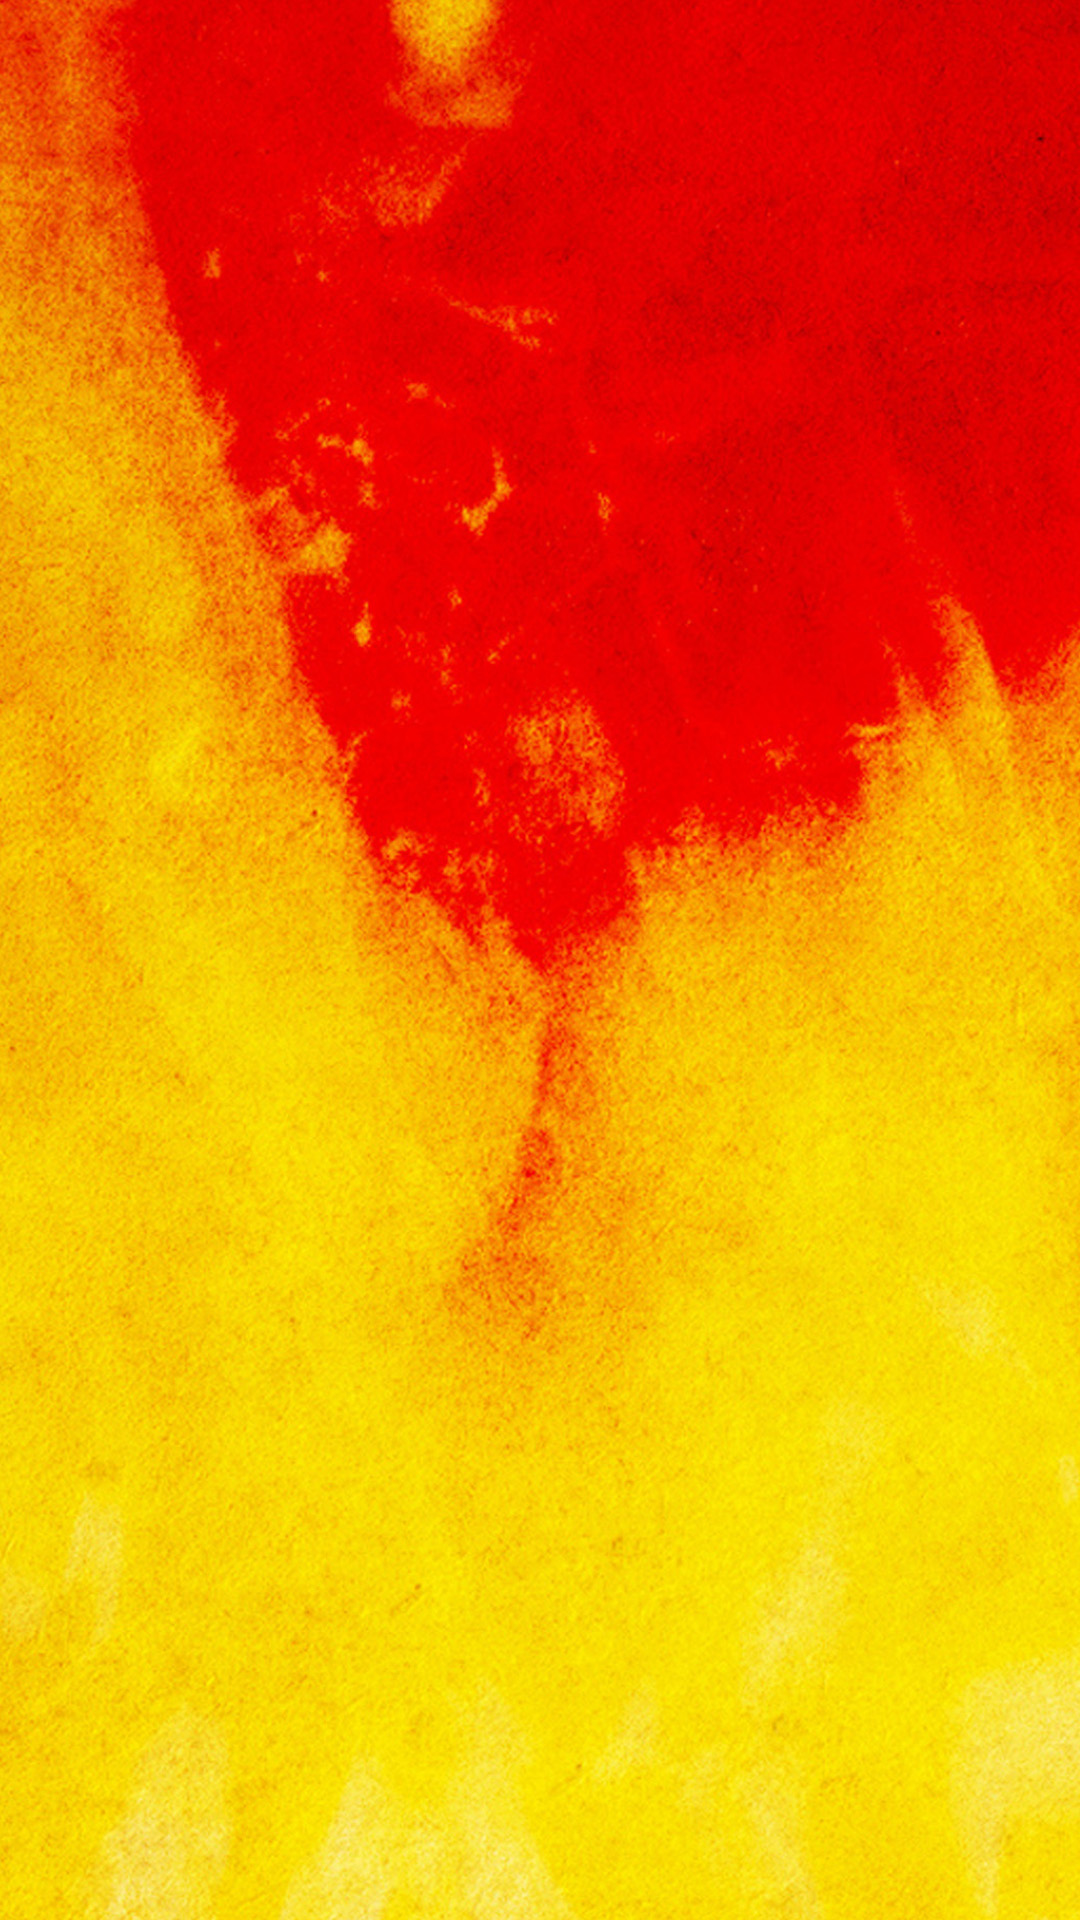 htc m8 wallpaper,rot,orange,gelb,aquarellfarbe